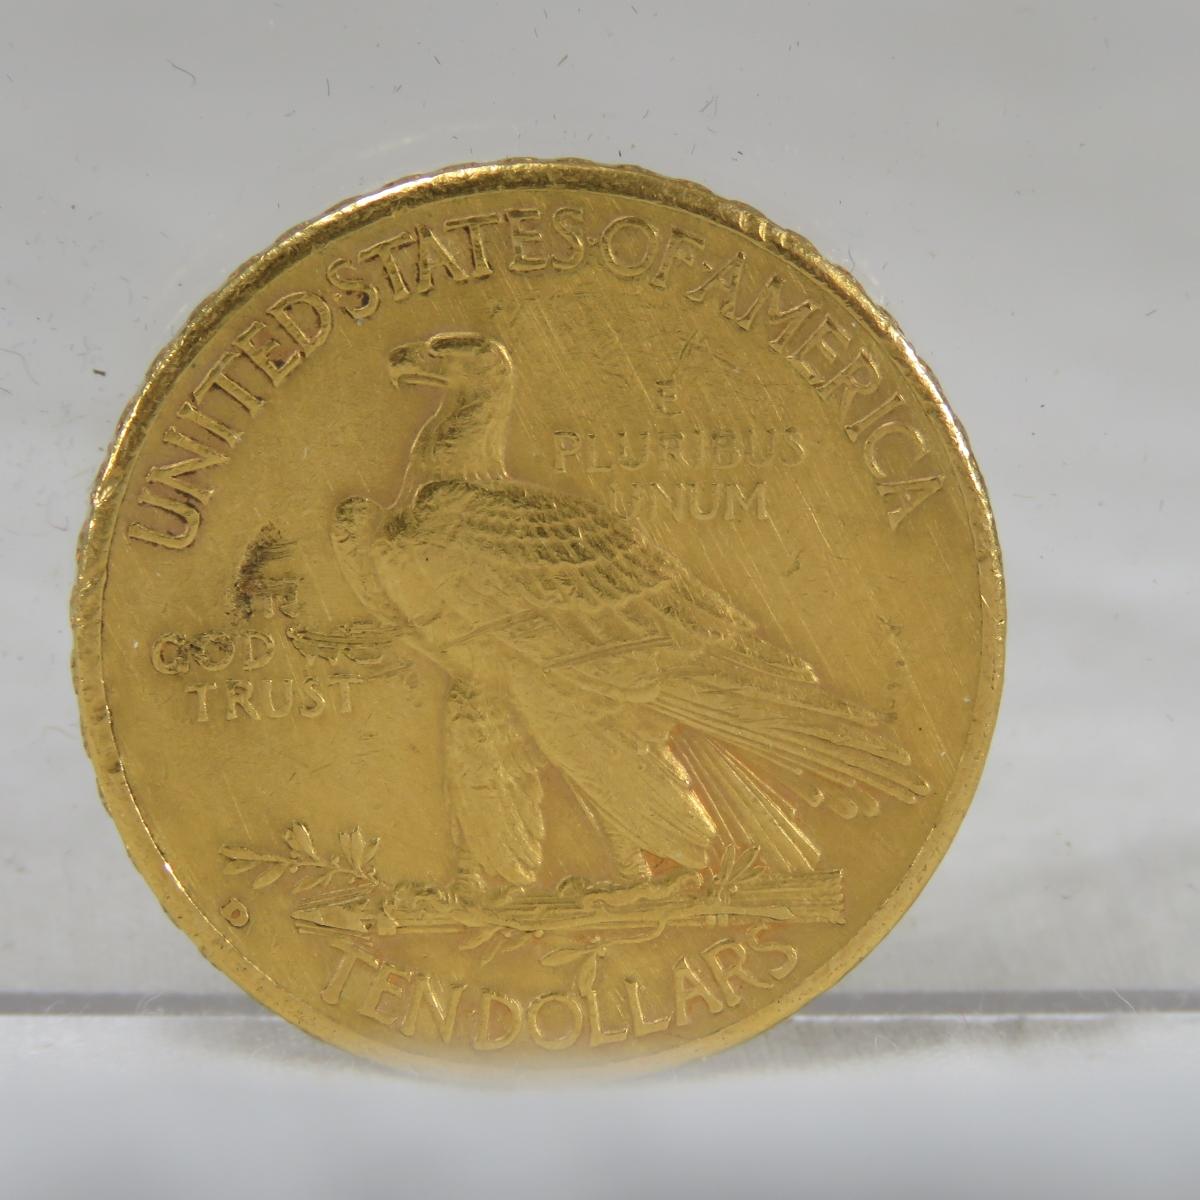 1910 D $10 Gold Indian Head Eagle